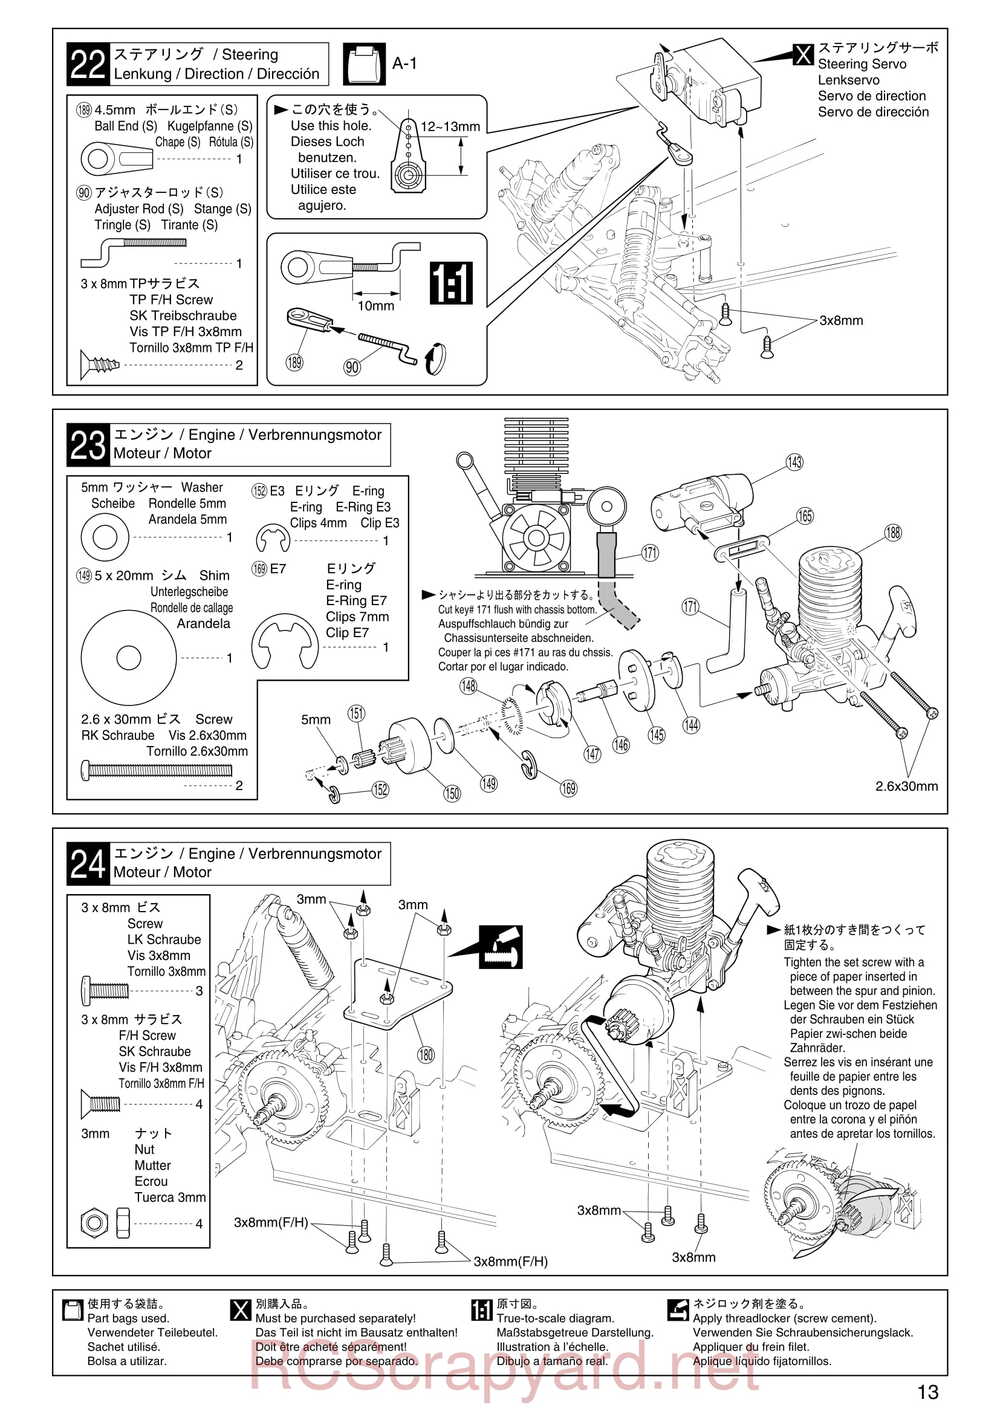 Kyosho - 31092 - GP Ultima RB Racing Sports - Manual - Page 13